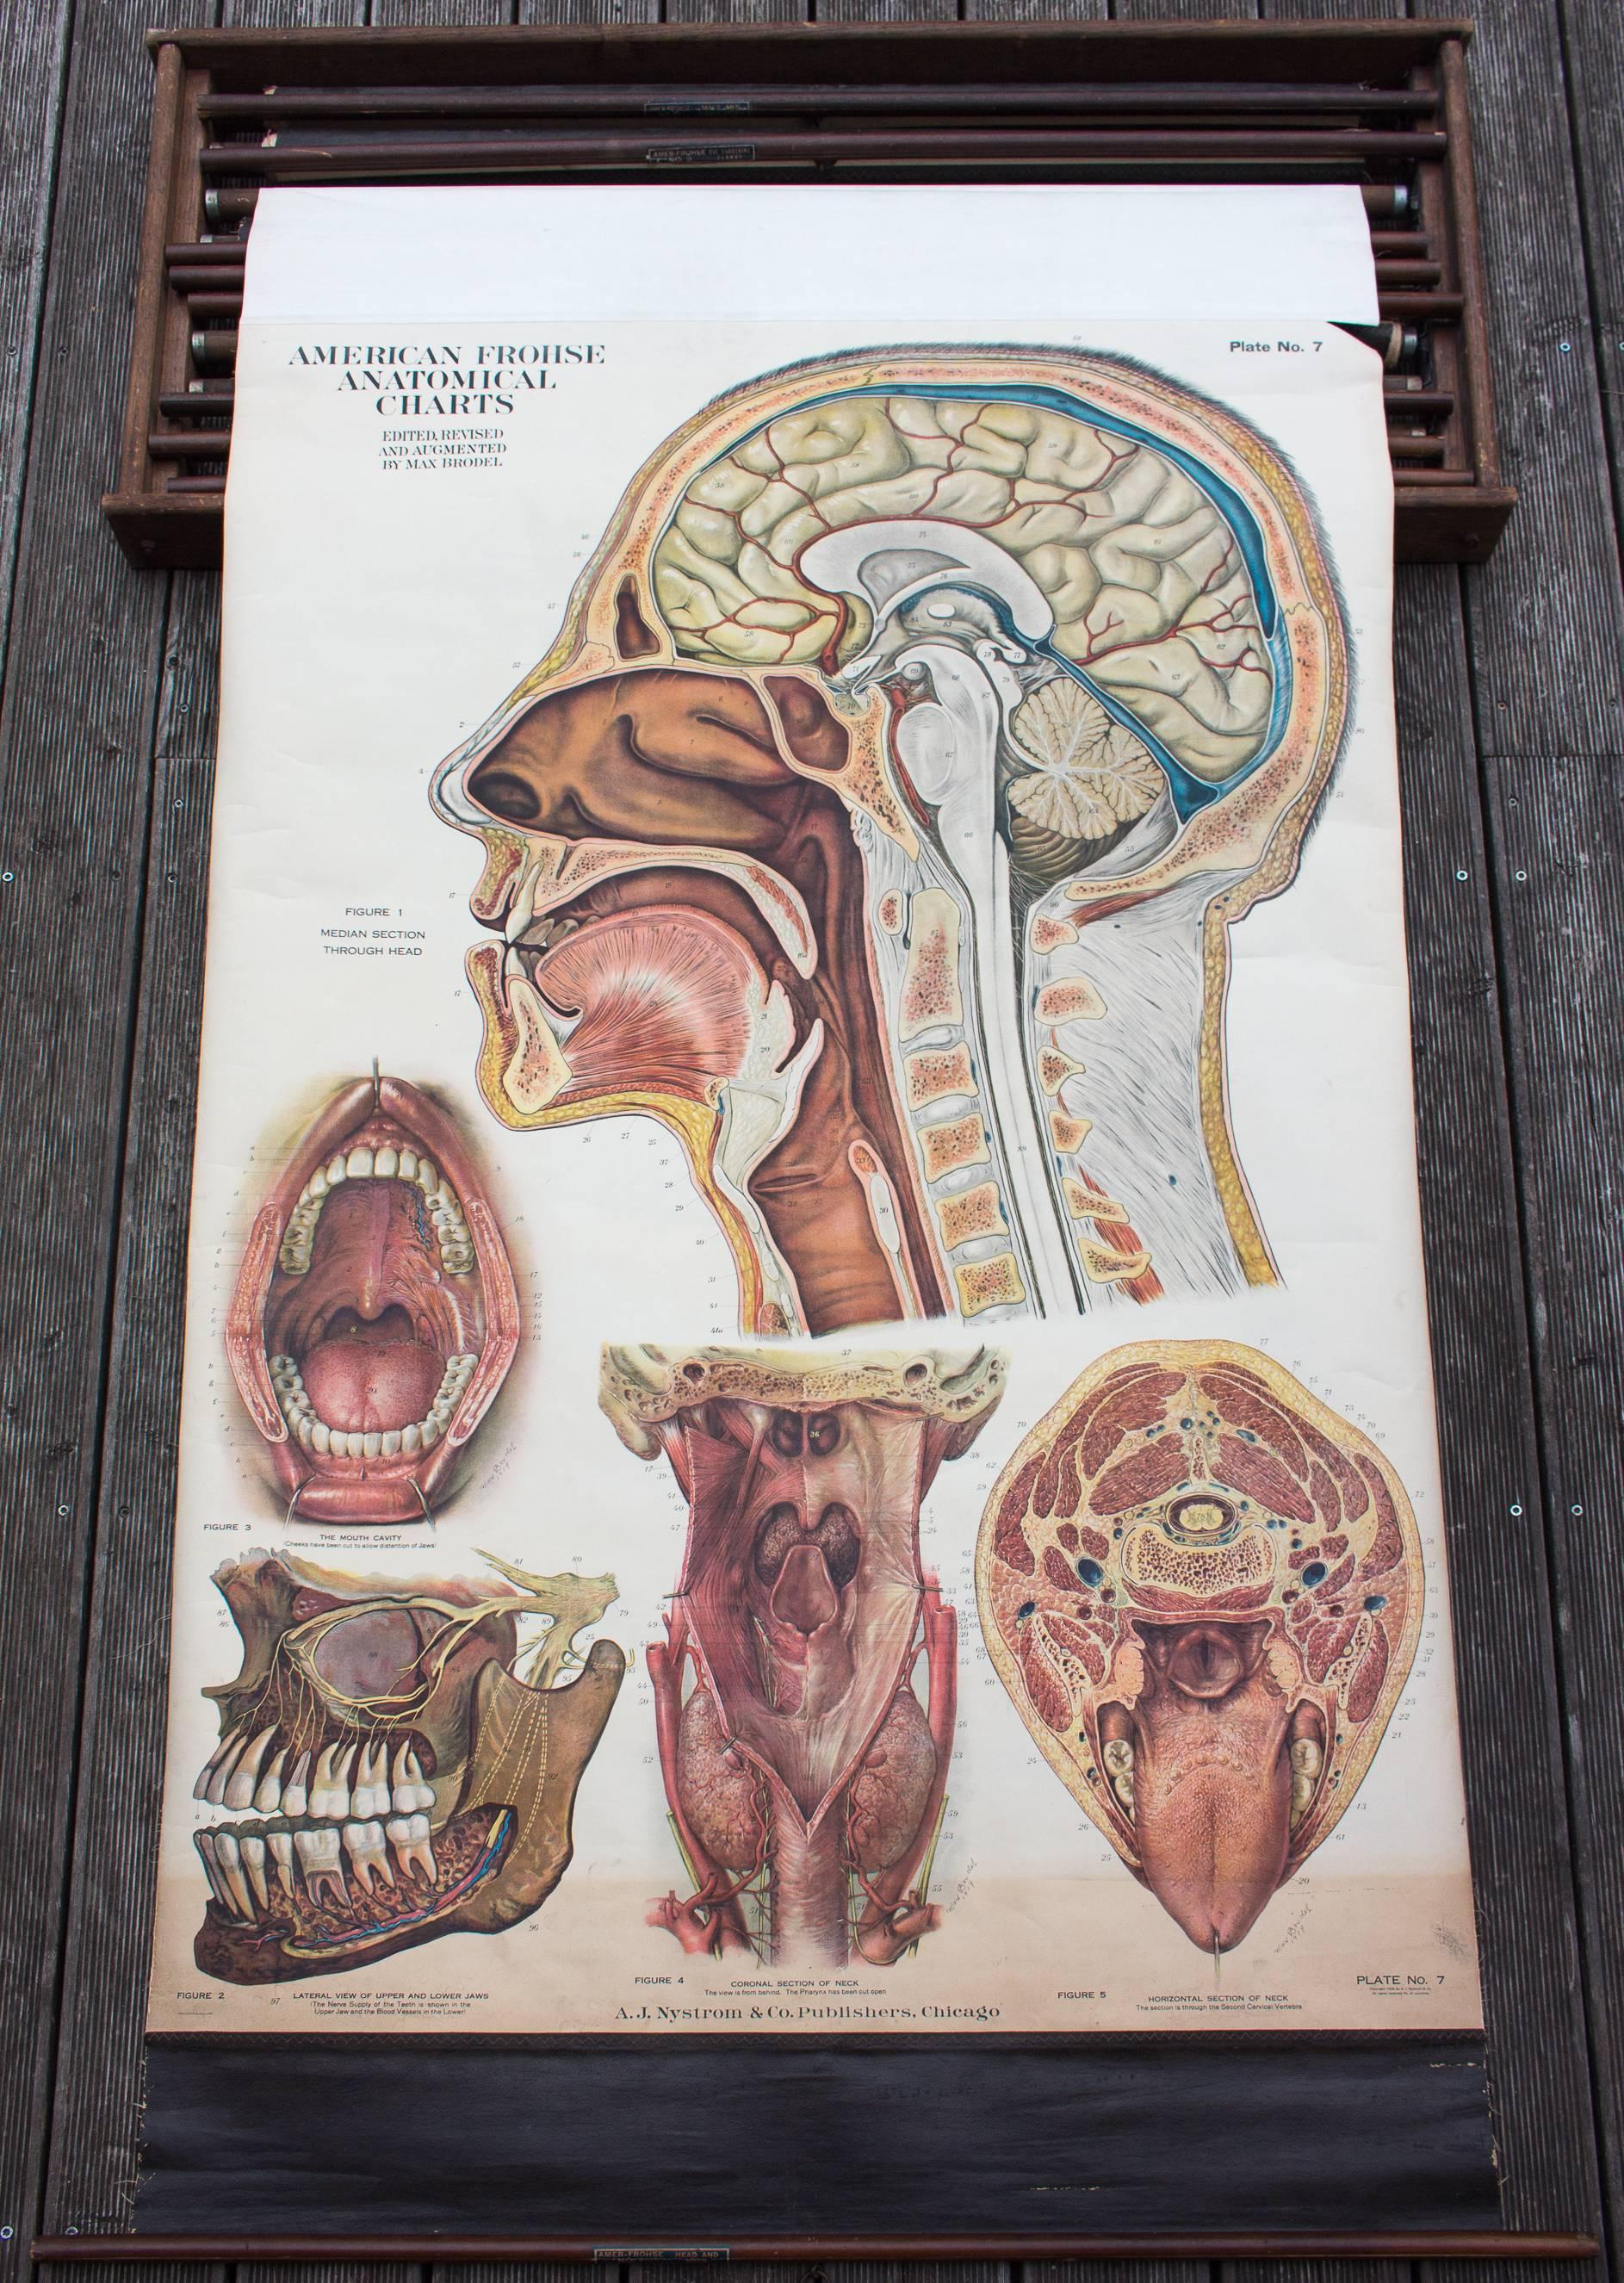 Max Brodel Anatomical Chart